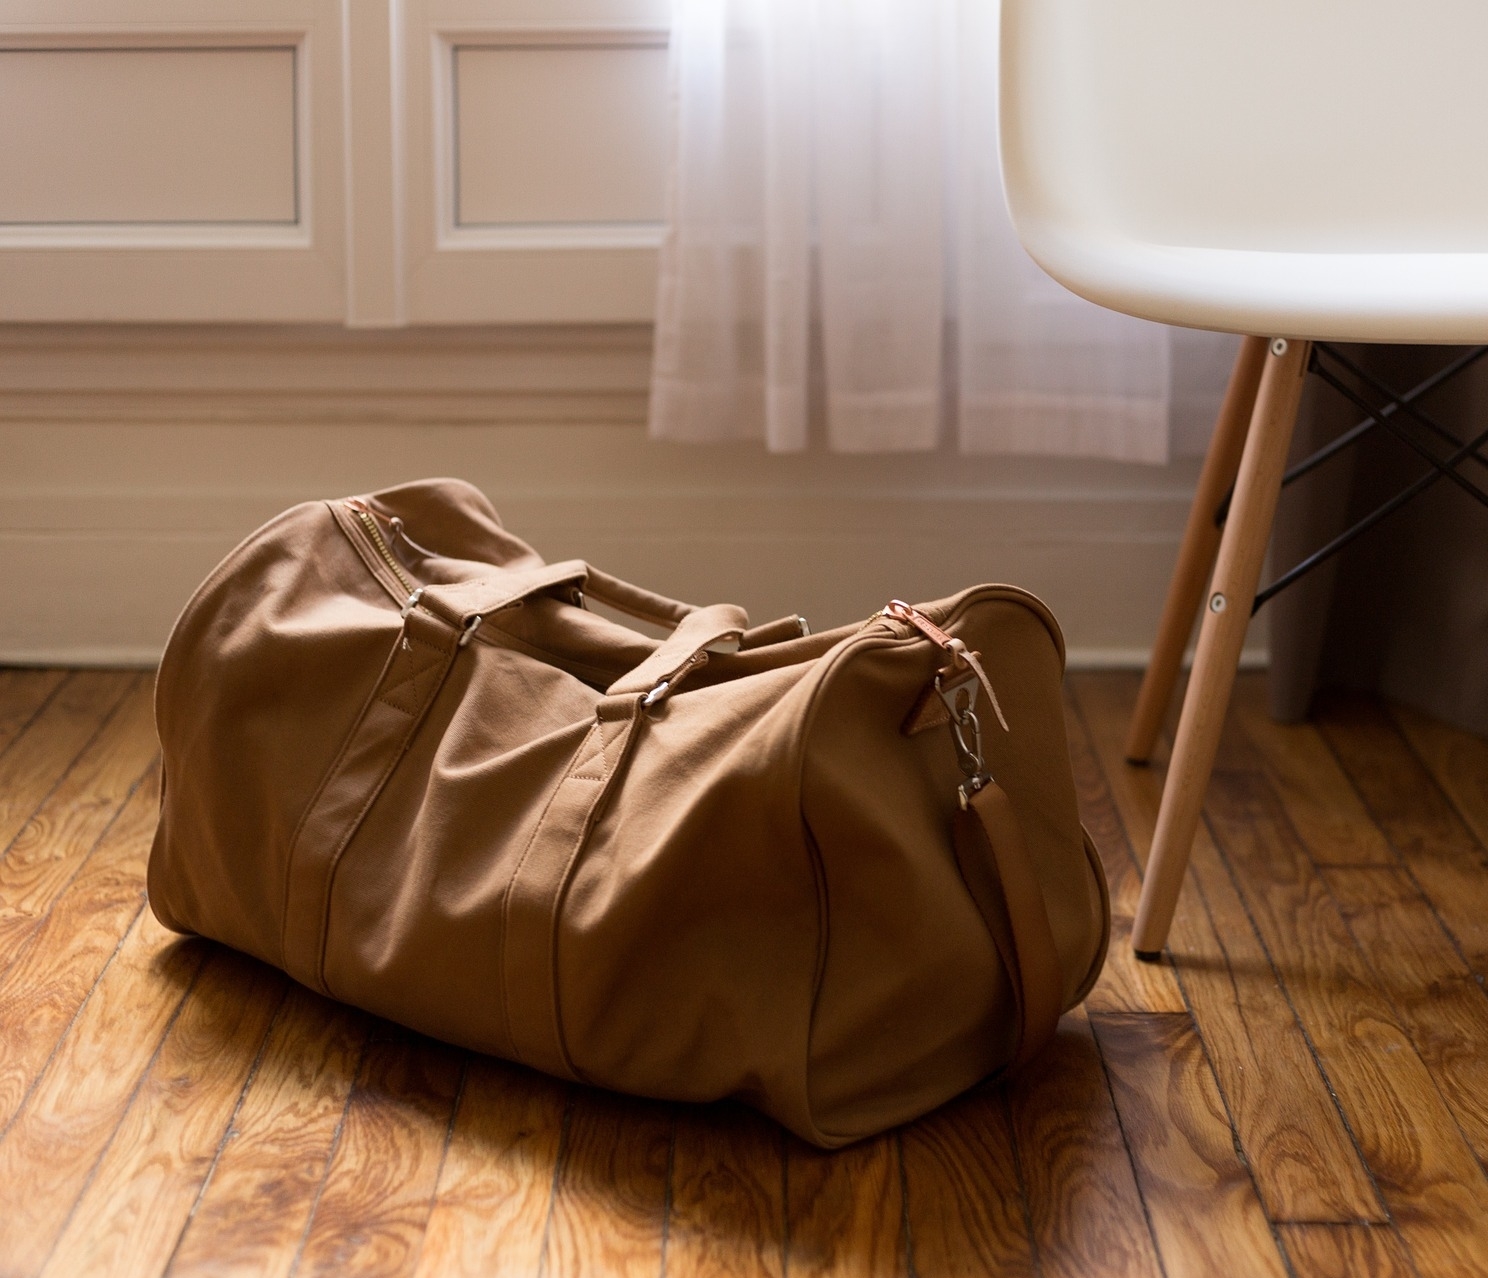 Gepäck & Handgepäck – Regelungen, hohe Gebühren ...